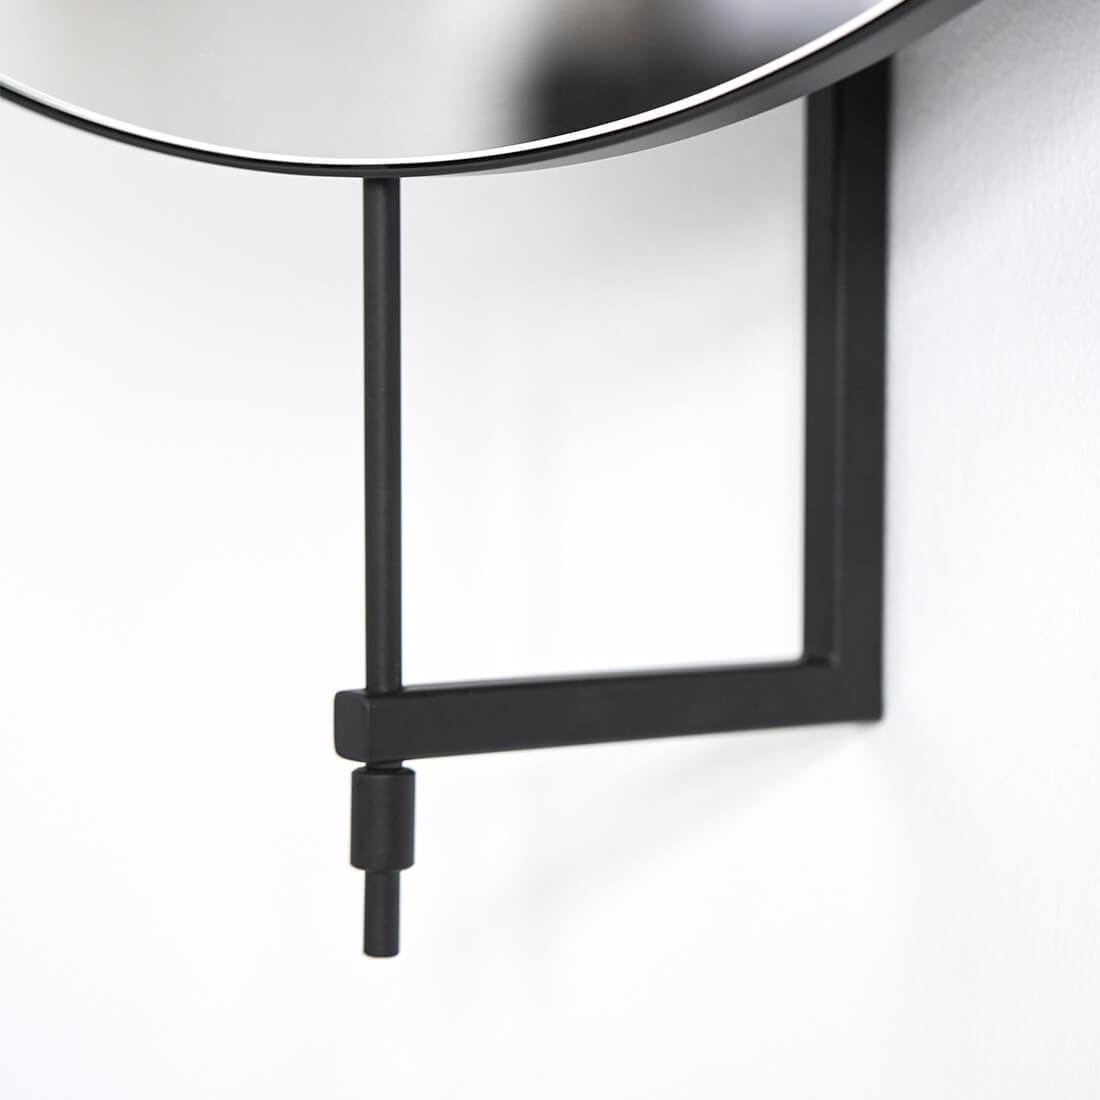 Danish Stainless Steel Circle Rotating Mirror by Kristina Dam Studio For Sale